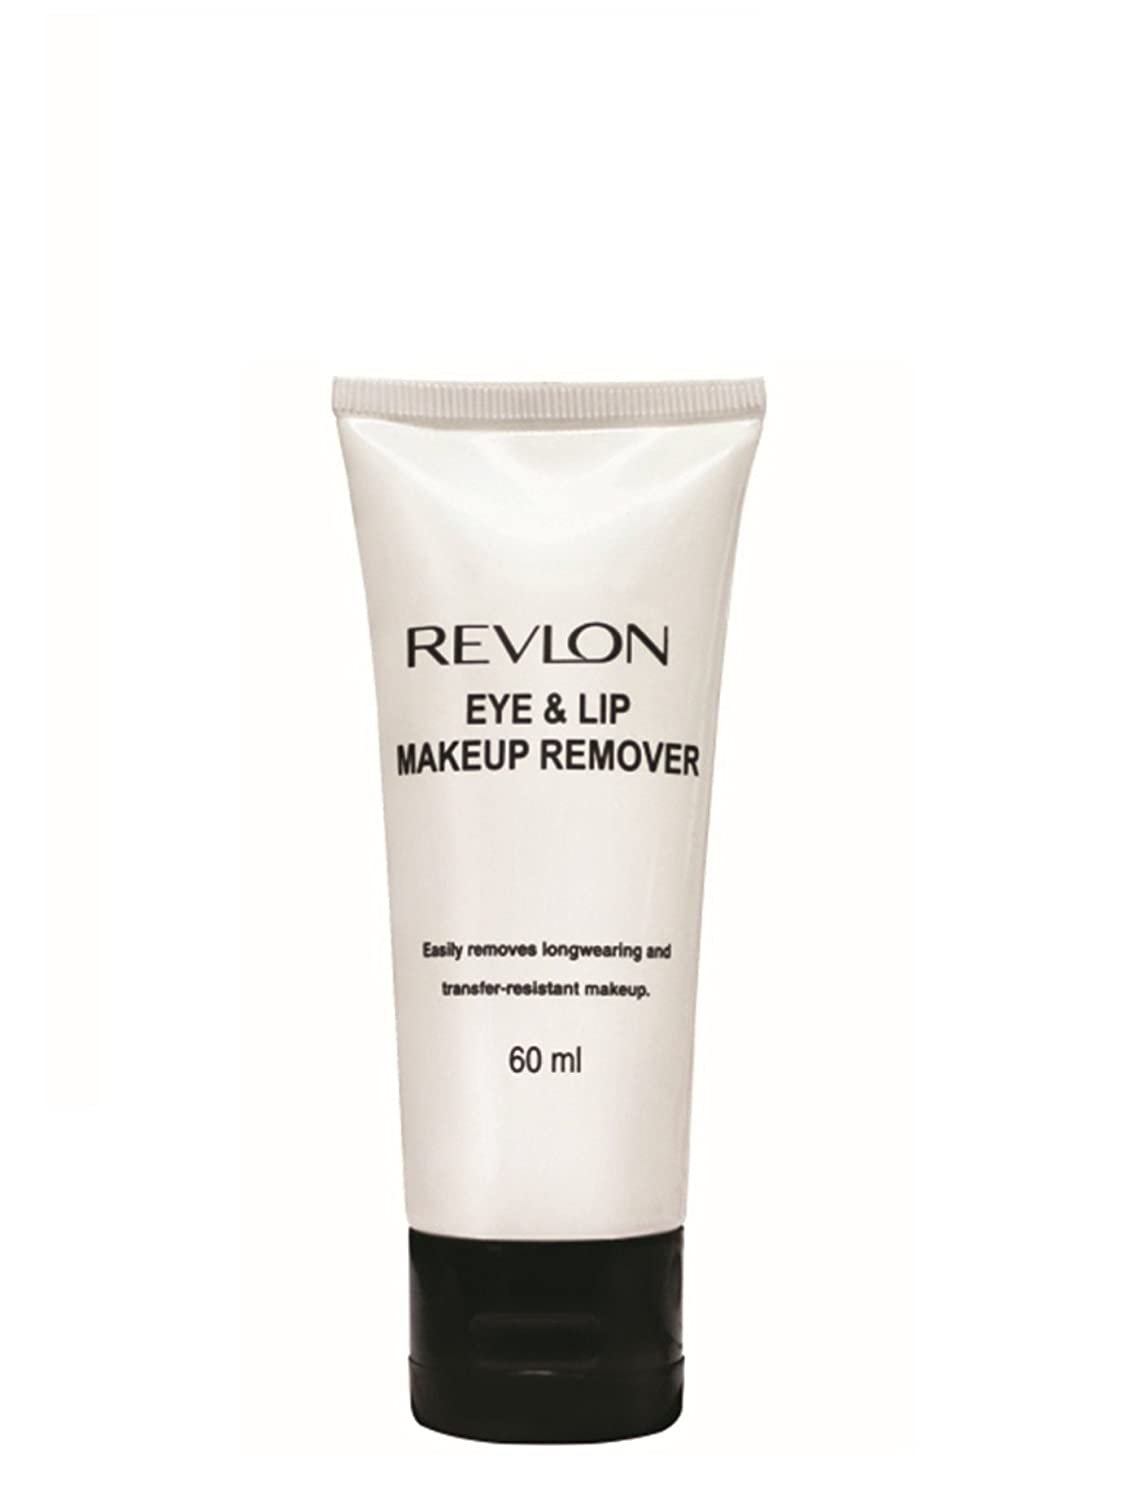 Revlon Eye and Lip Make Up Remover, 60ml